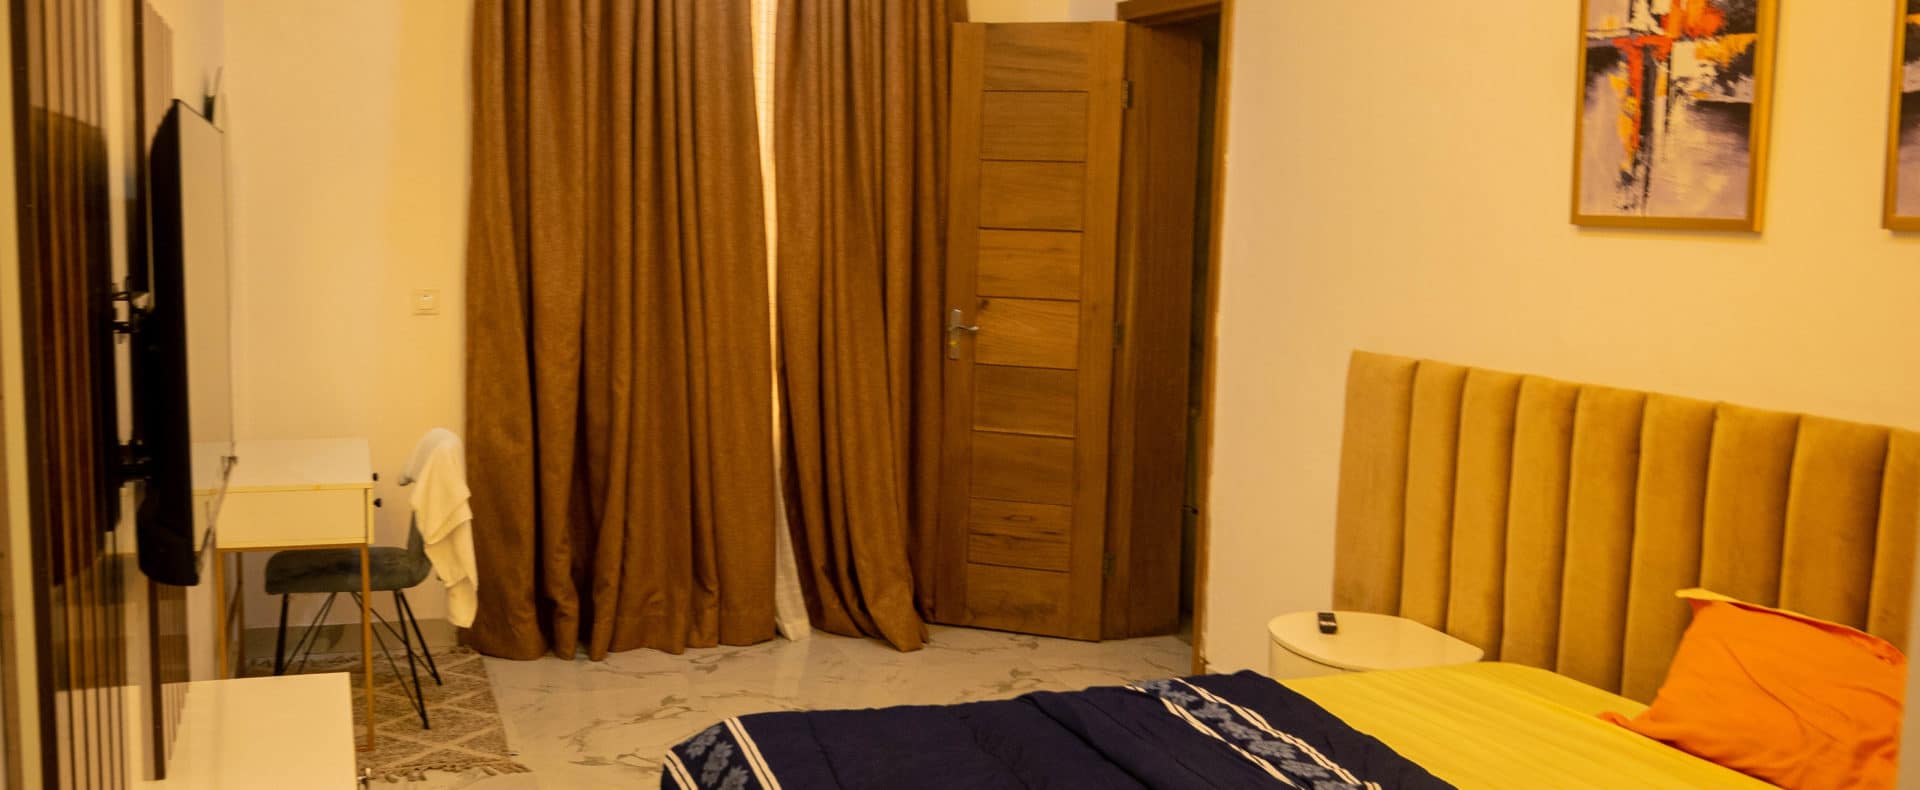 Luxury 2 Bedroom Newocean Short Let Apartment In Lagos Nigeria